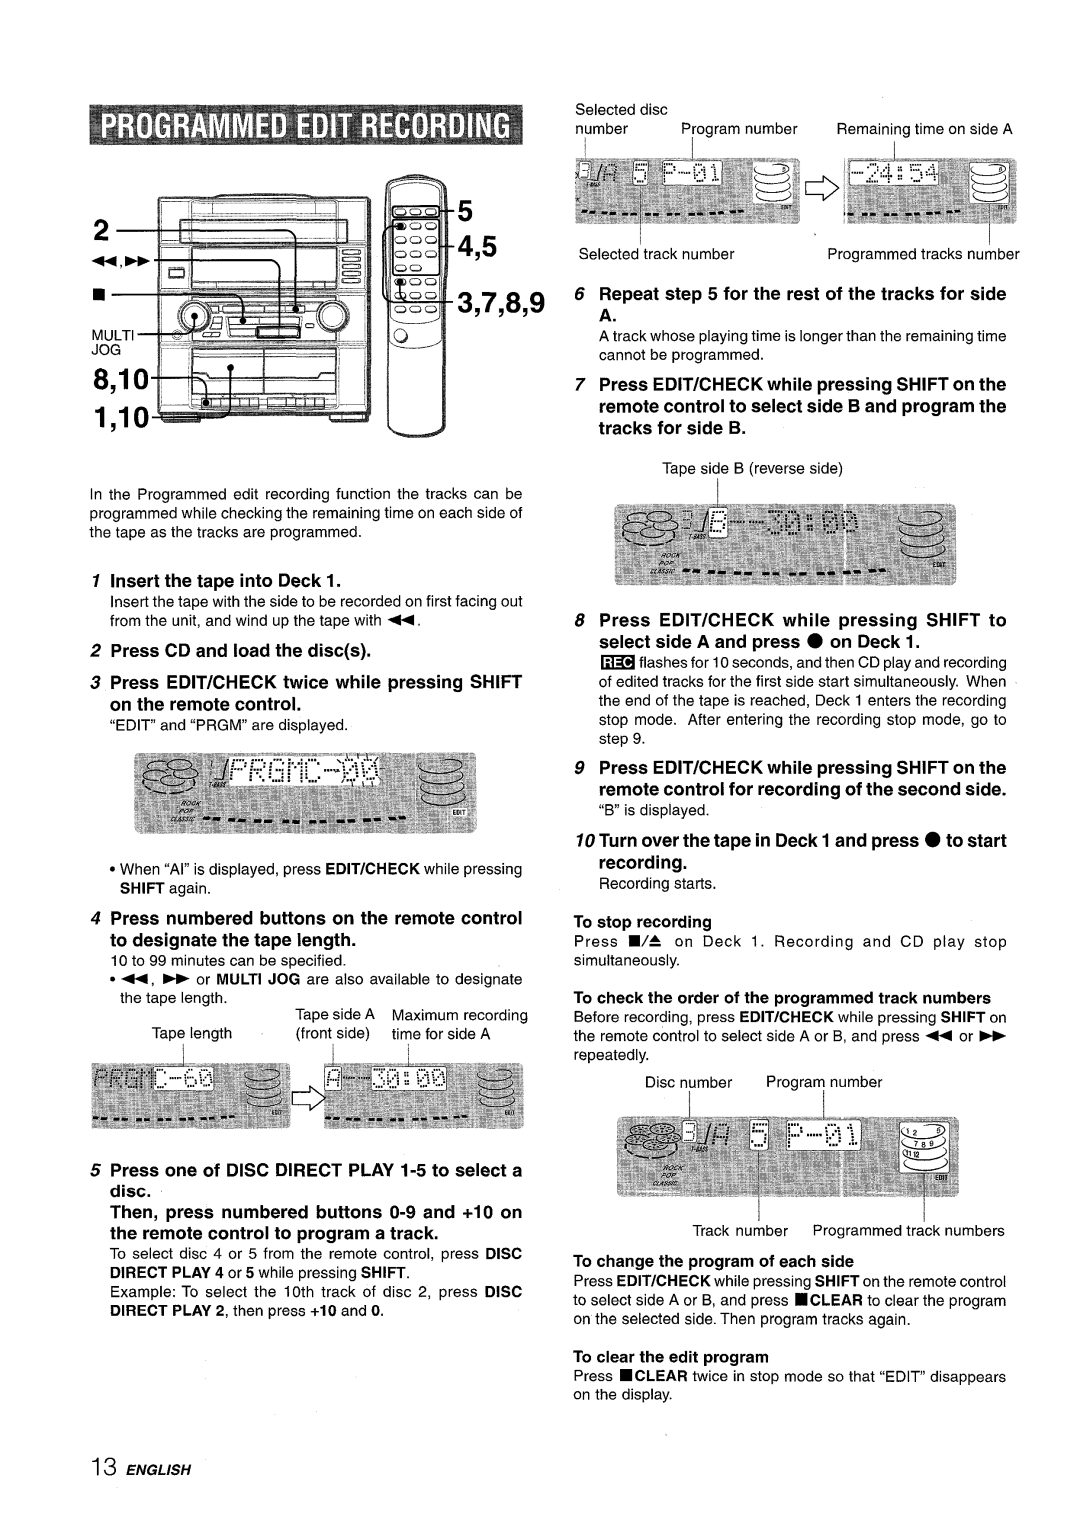 Aiwa Z-R555 4,5 3,7,8,9, Press EDIT/CHECK twice while pressing SHIFT on the remote control, Insert the tape into Deck 